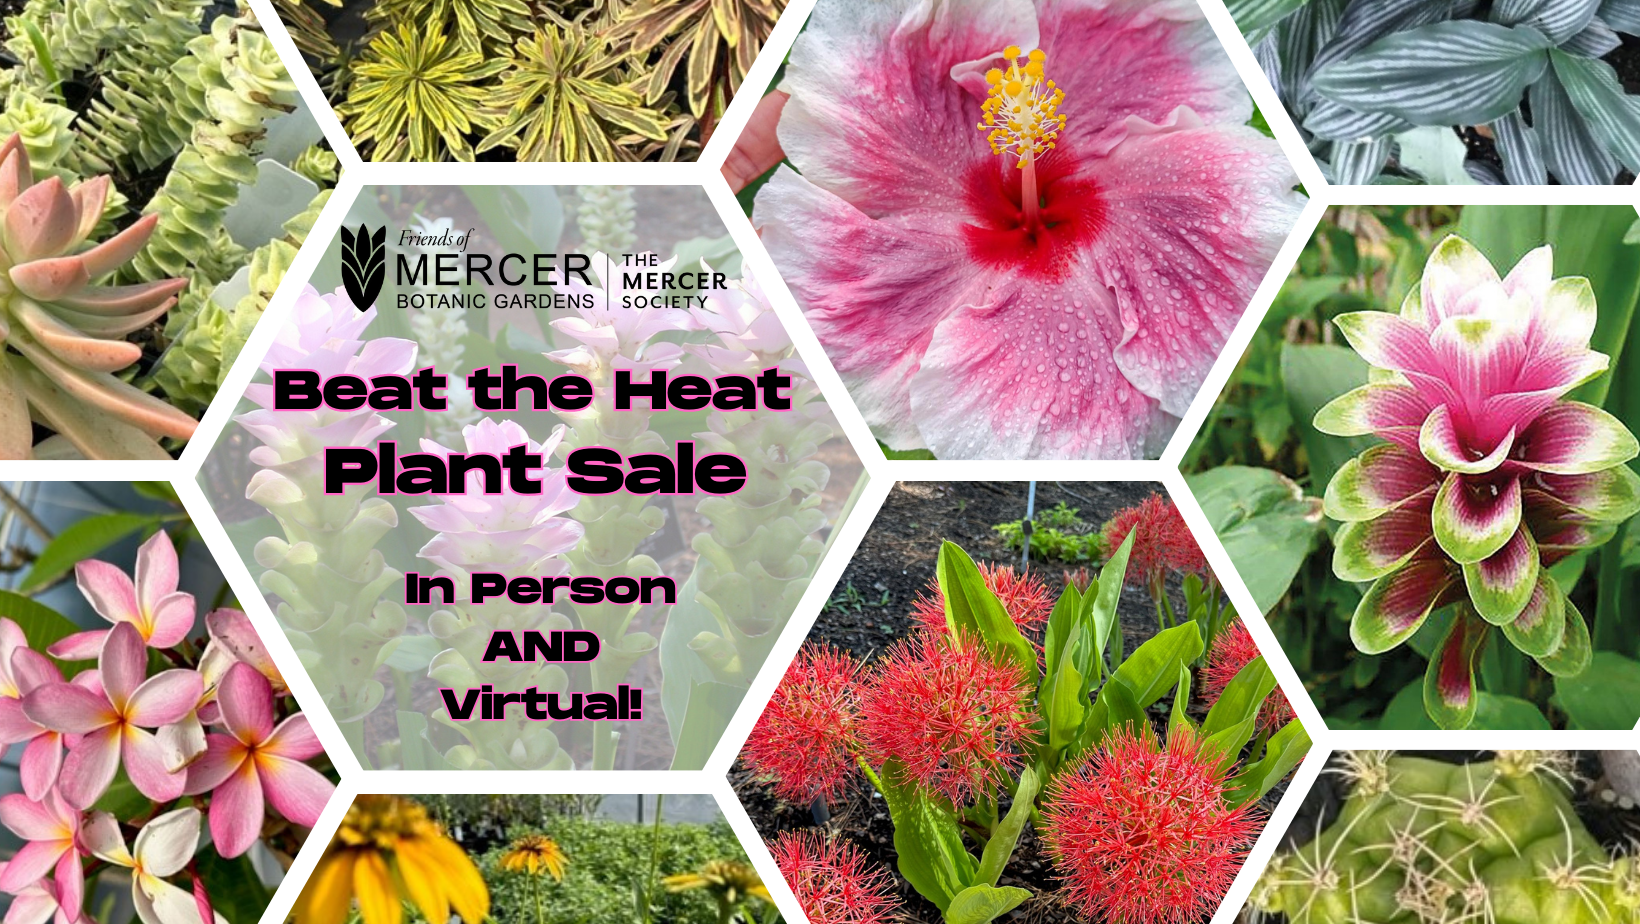 Mercer Botanic Gardens to Host Beat the Heat Plant Sale